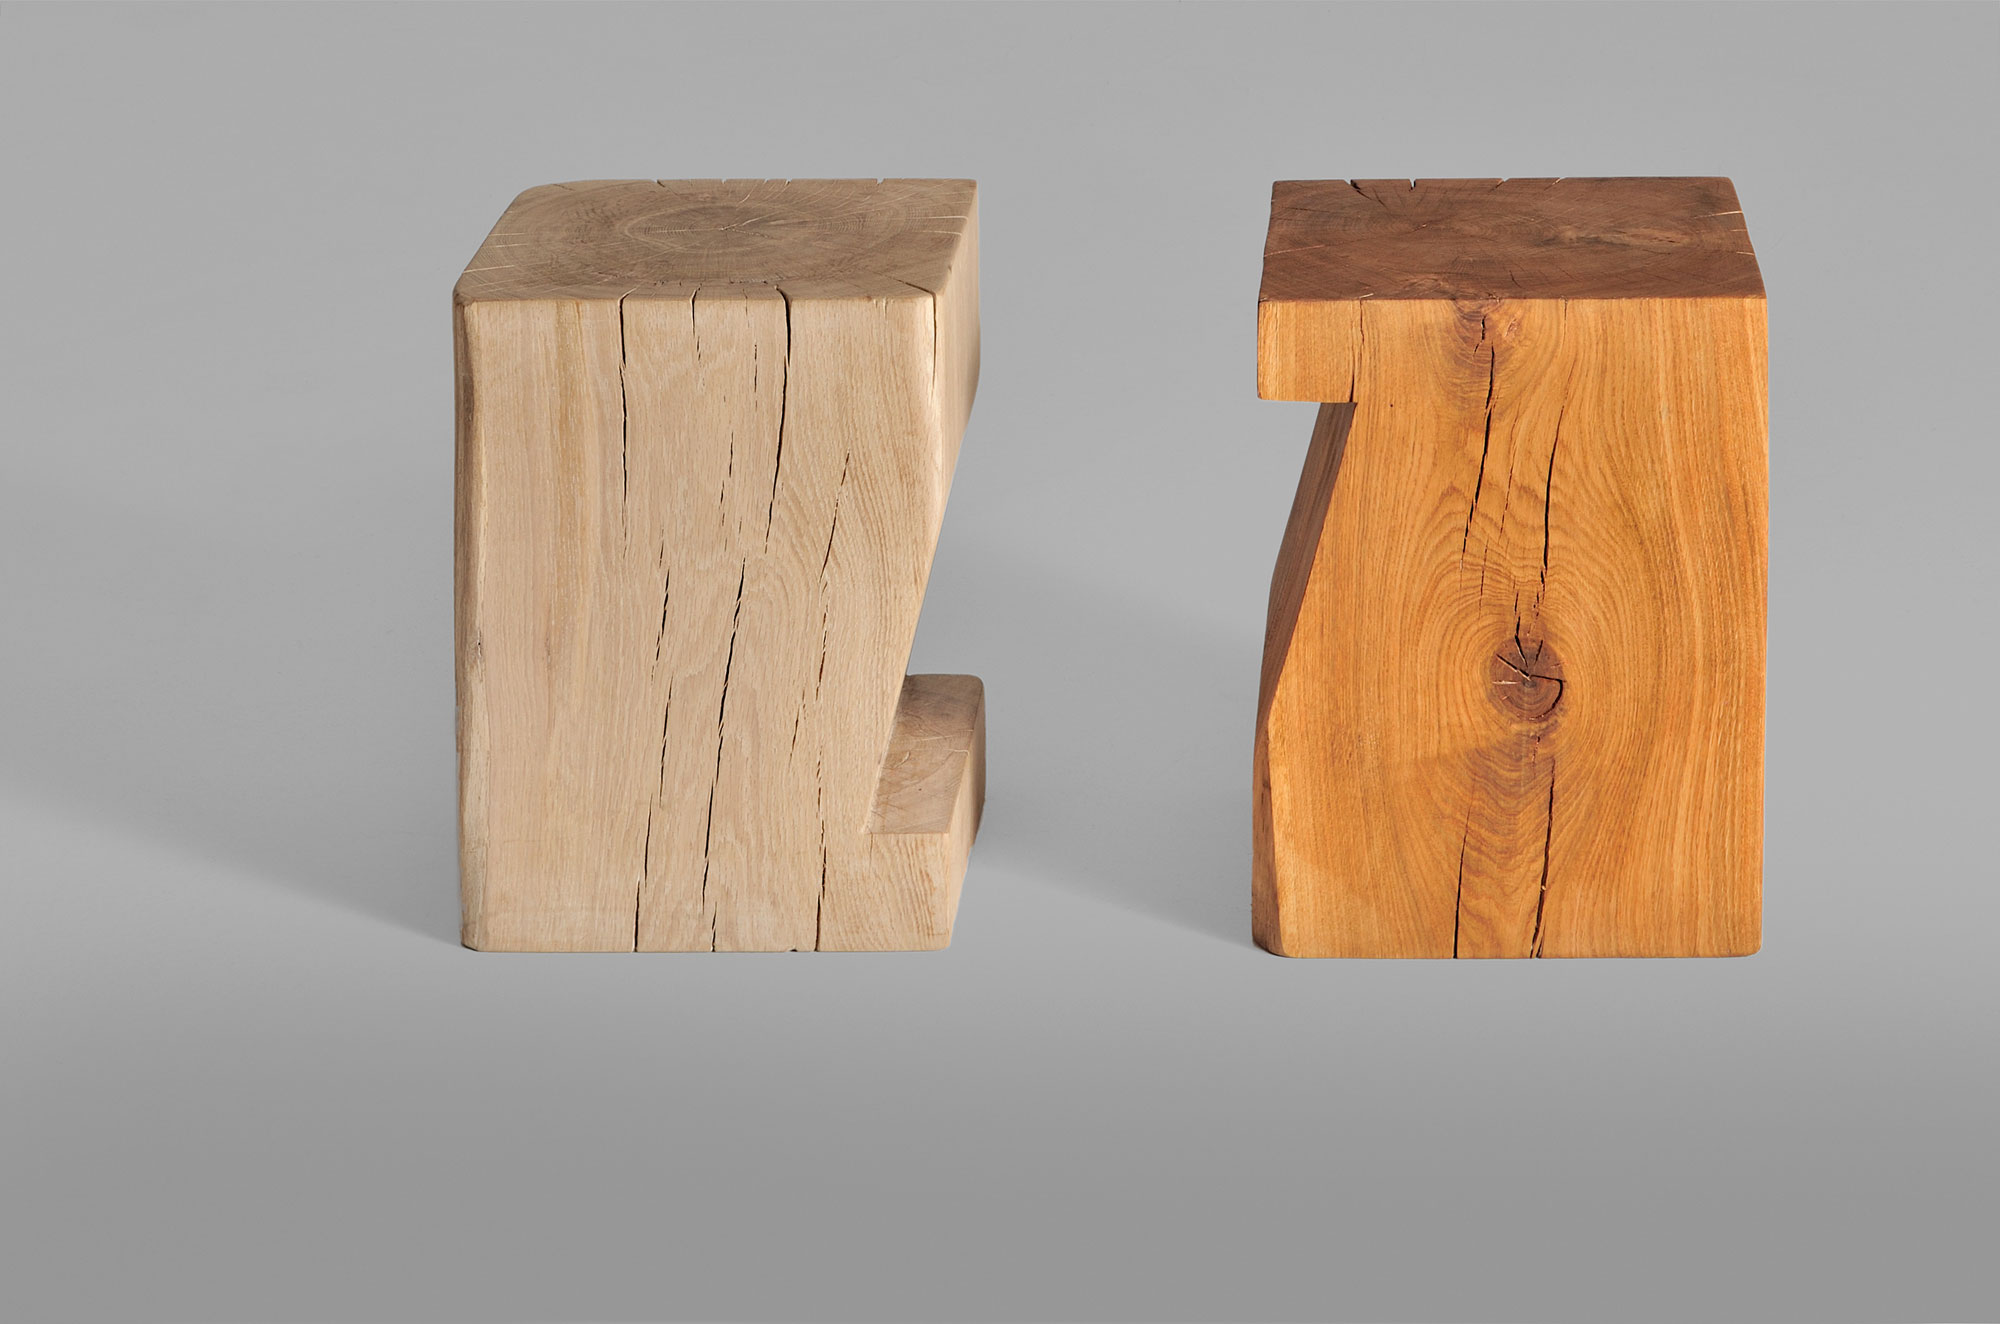 Tree Stump Stool PFEIFE 3665 custom made in solid wood by vitamin design